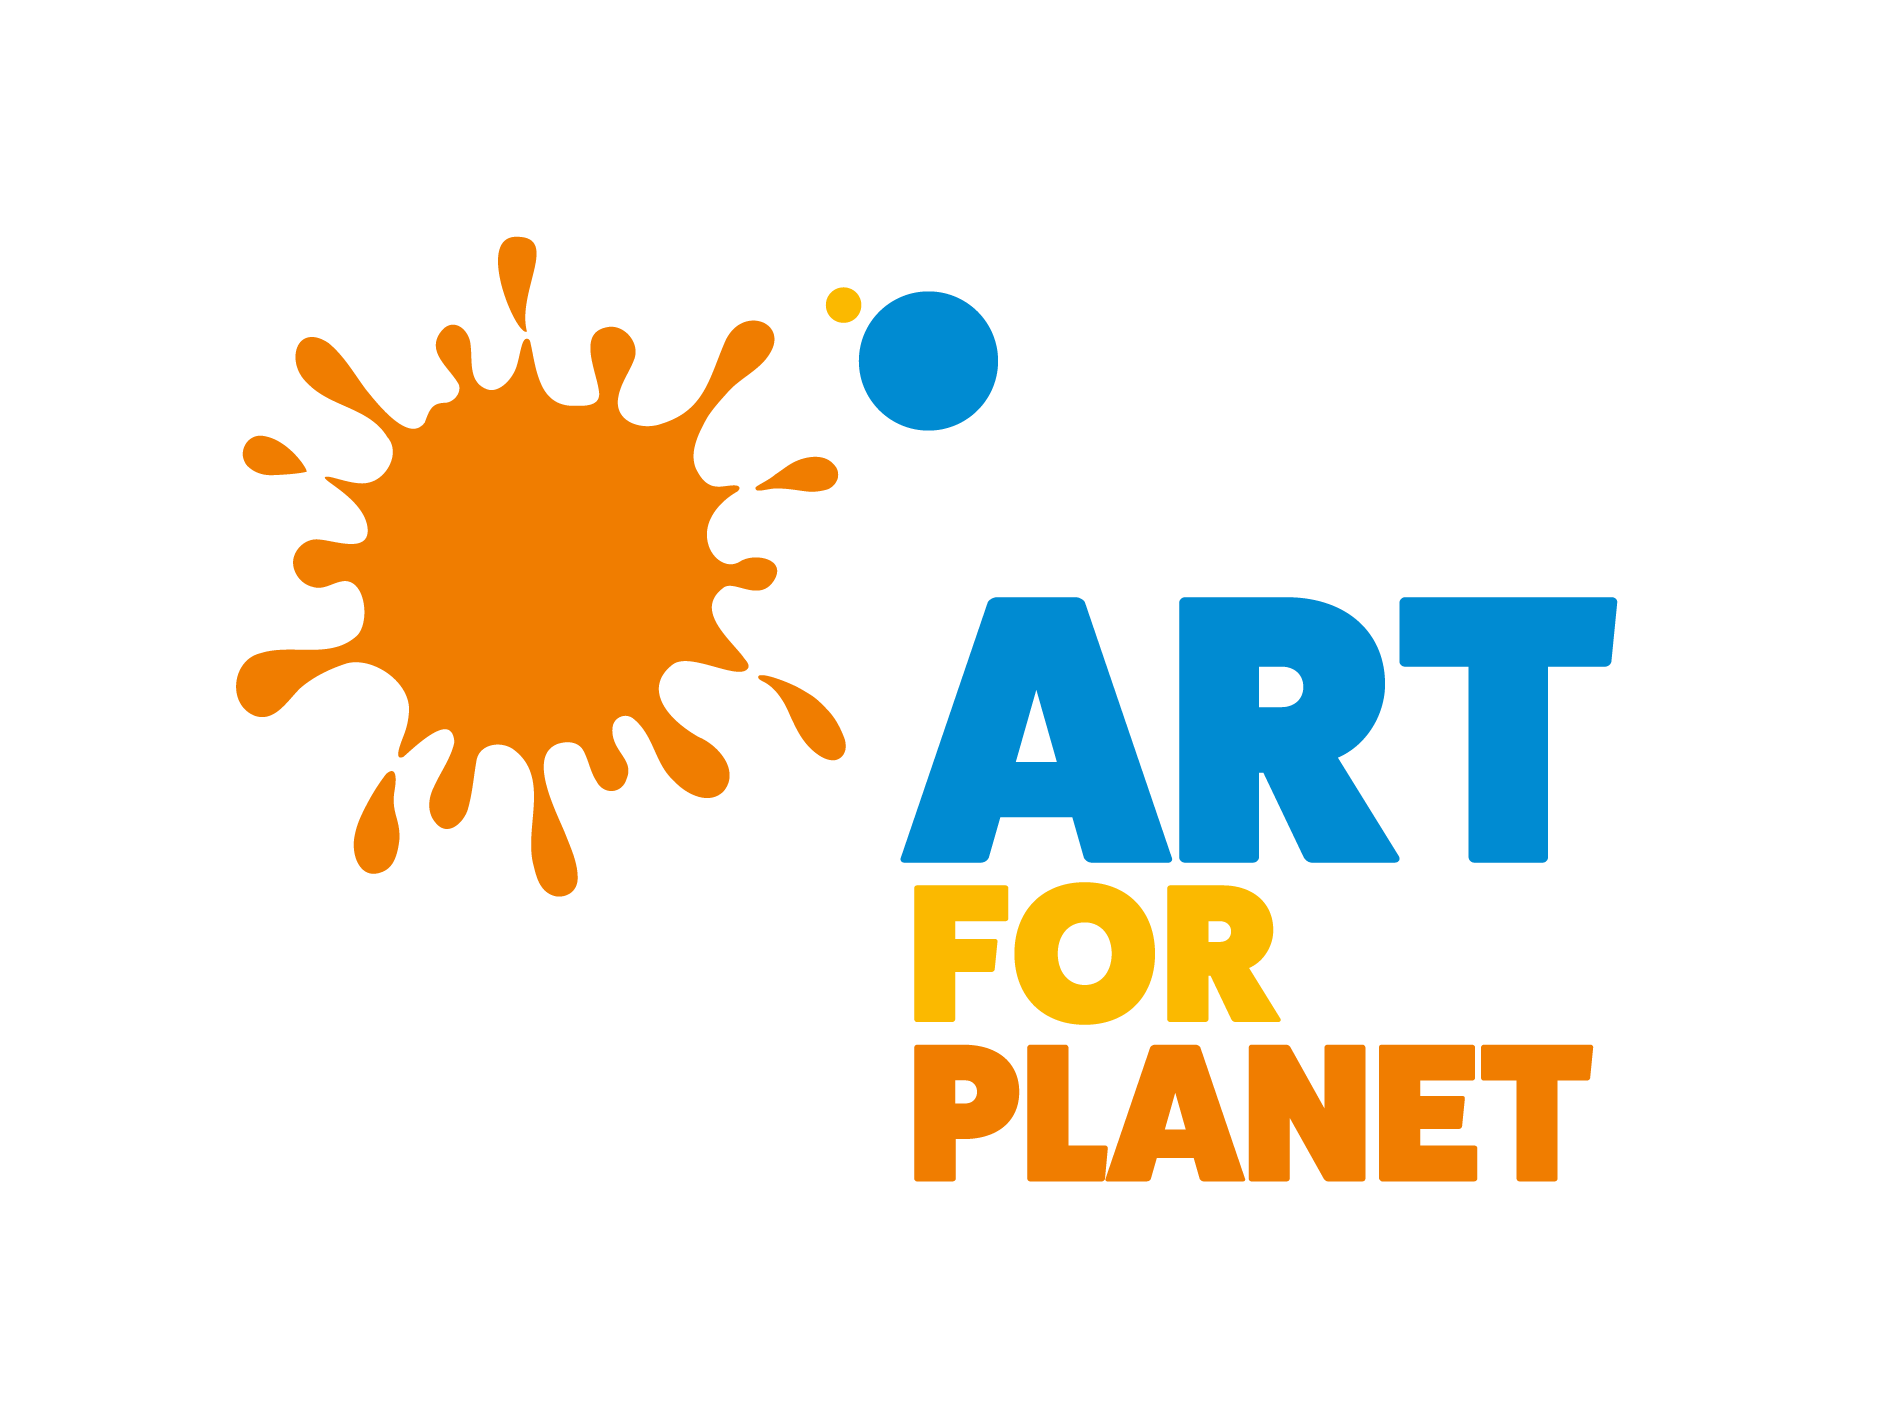 Art for planet